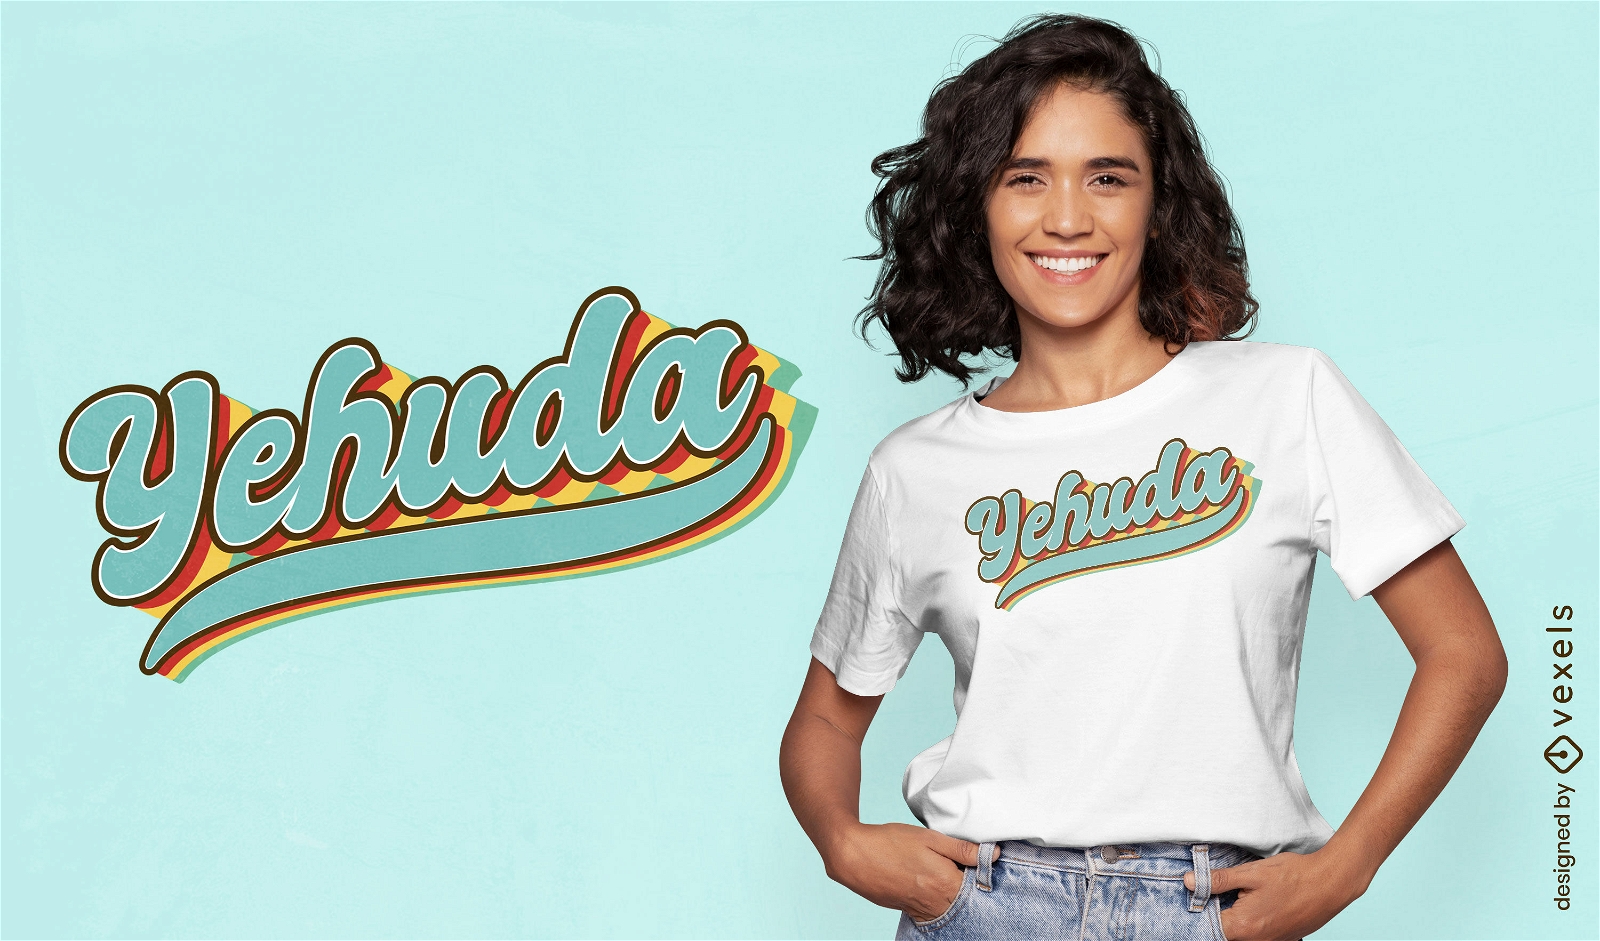 Yehuda name t-shirt design